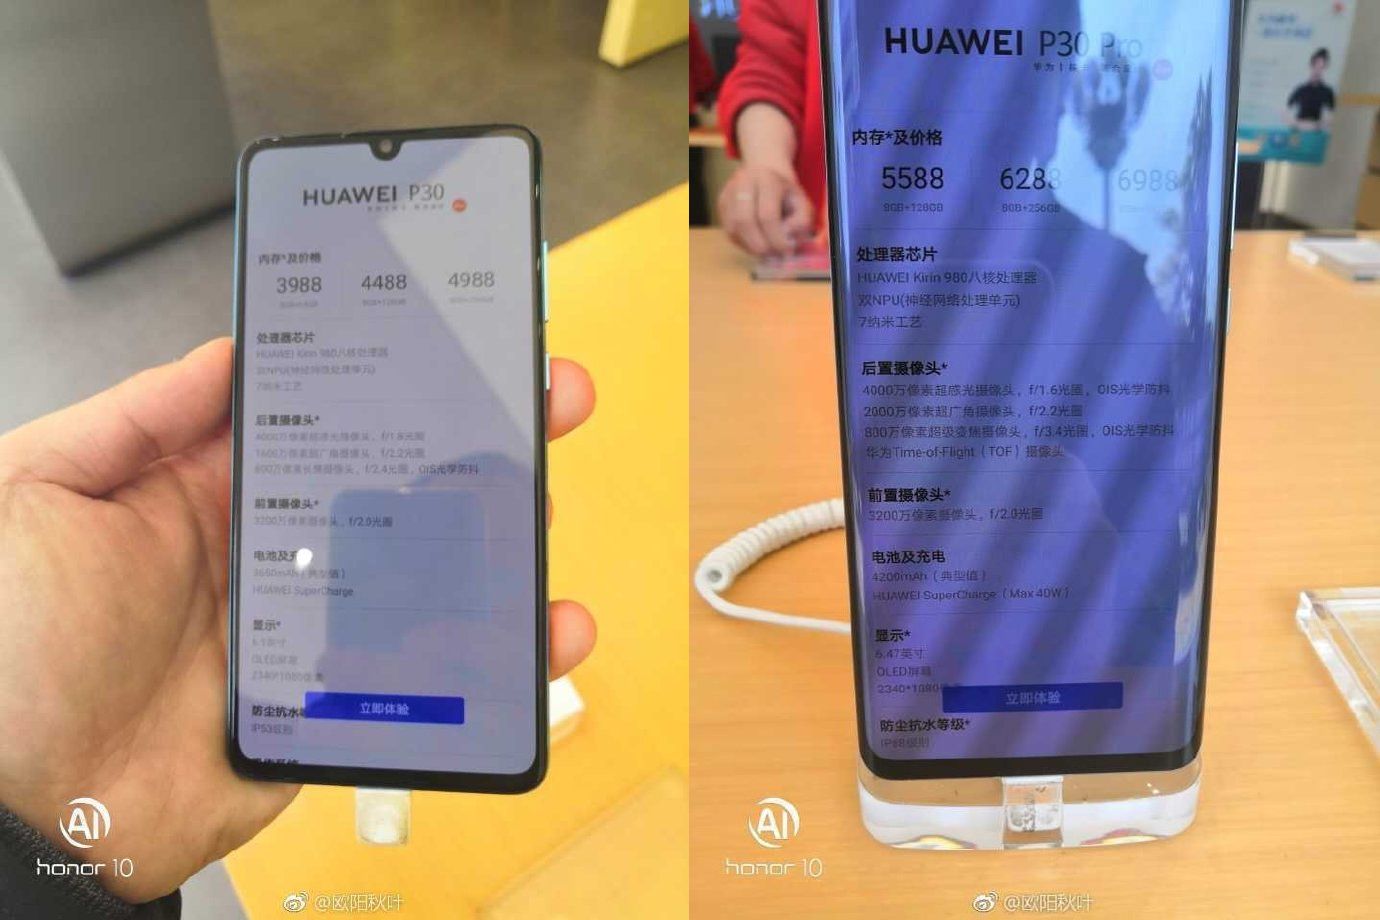 Huawei P30 and P30 Pro China Price_